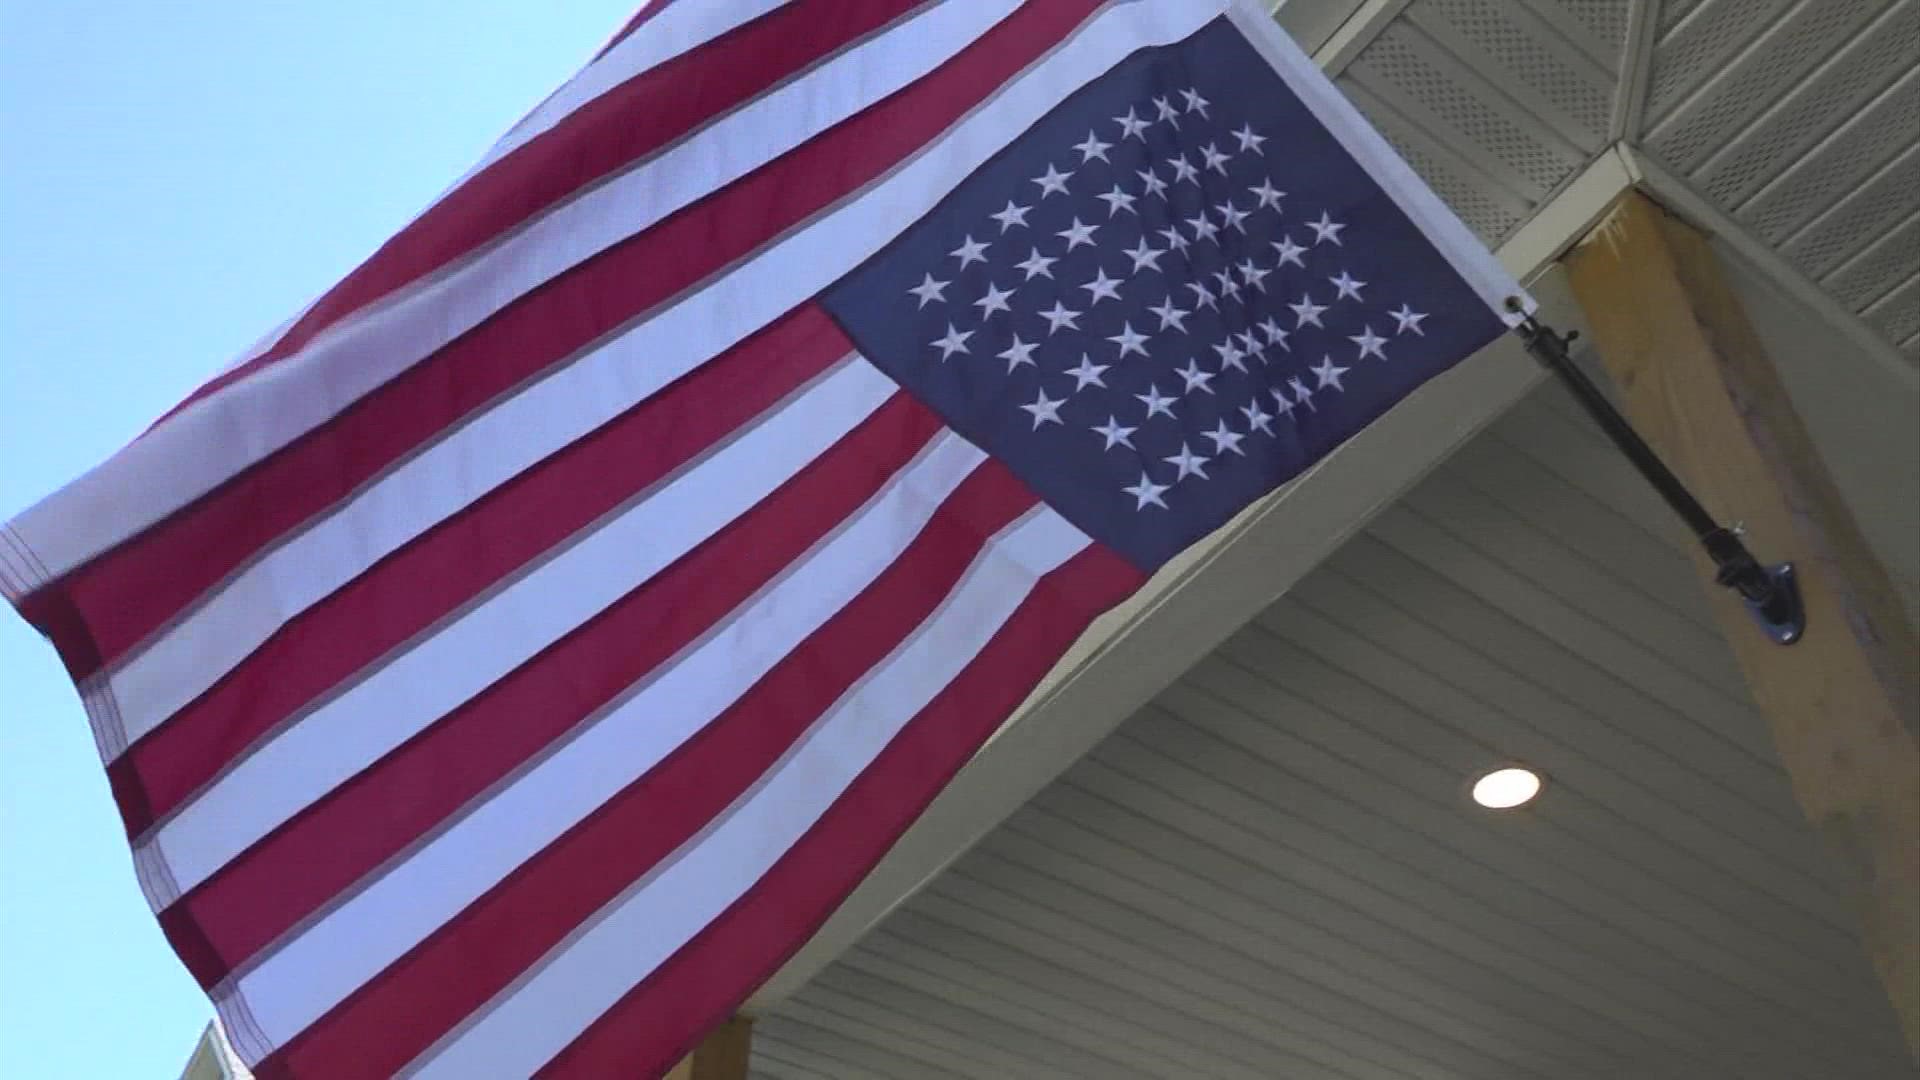 Americans display U.S. flag upside down in protest of Roe